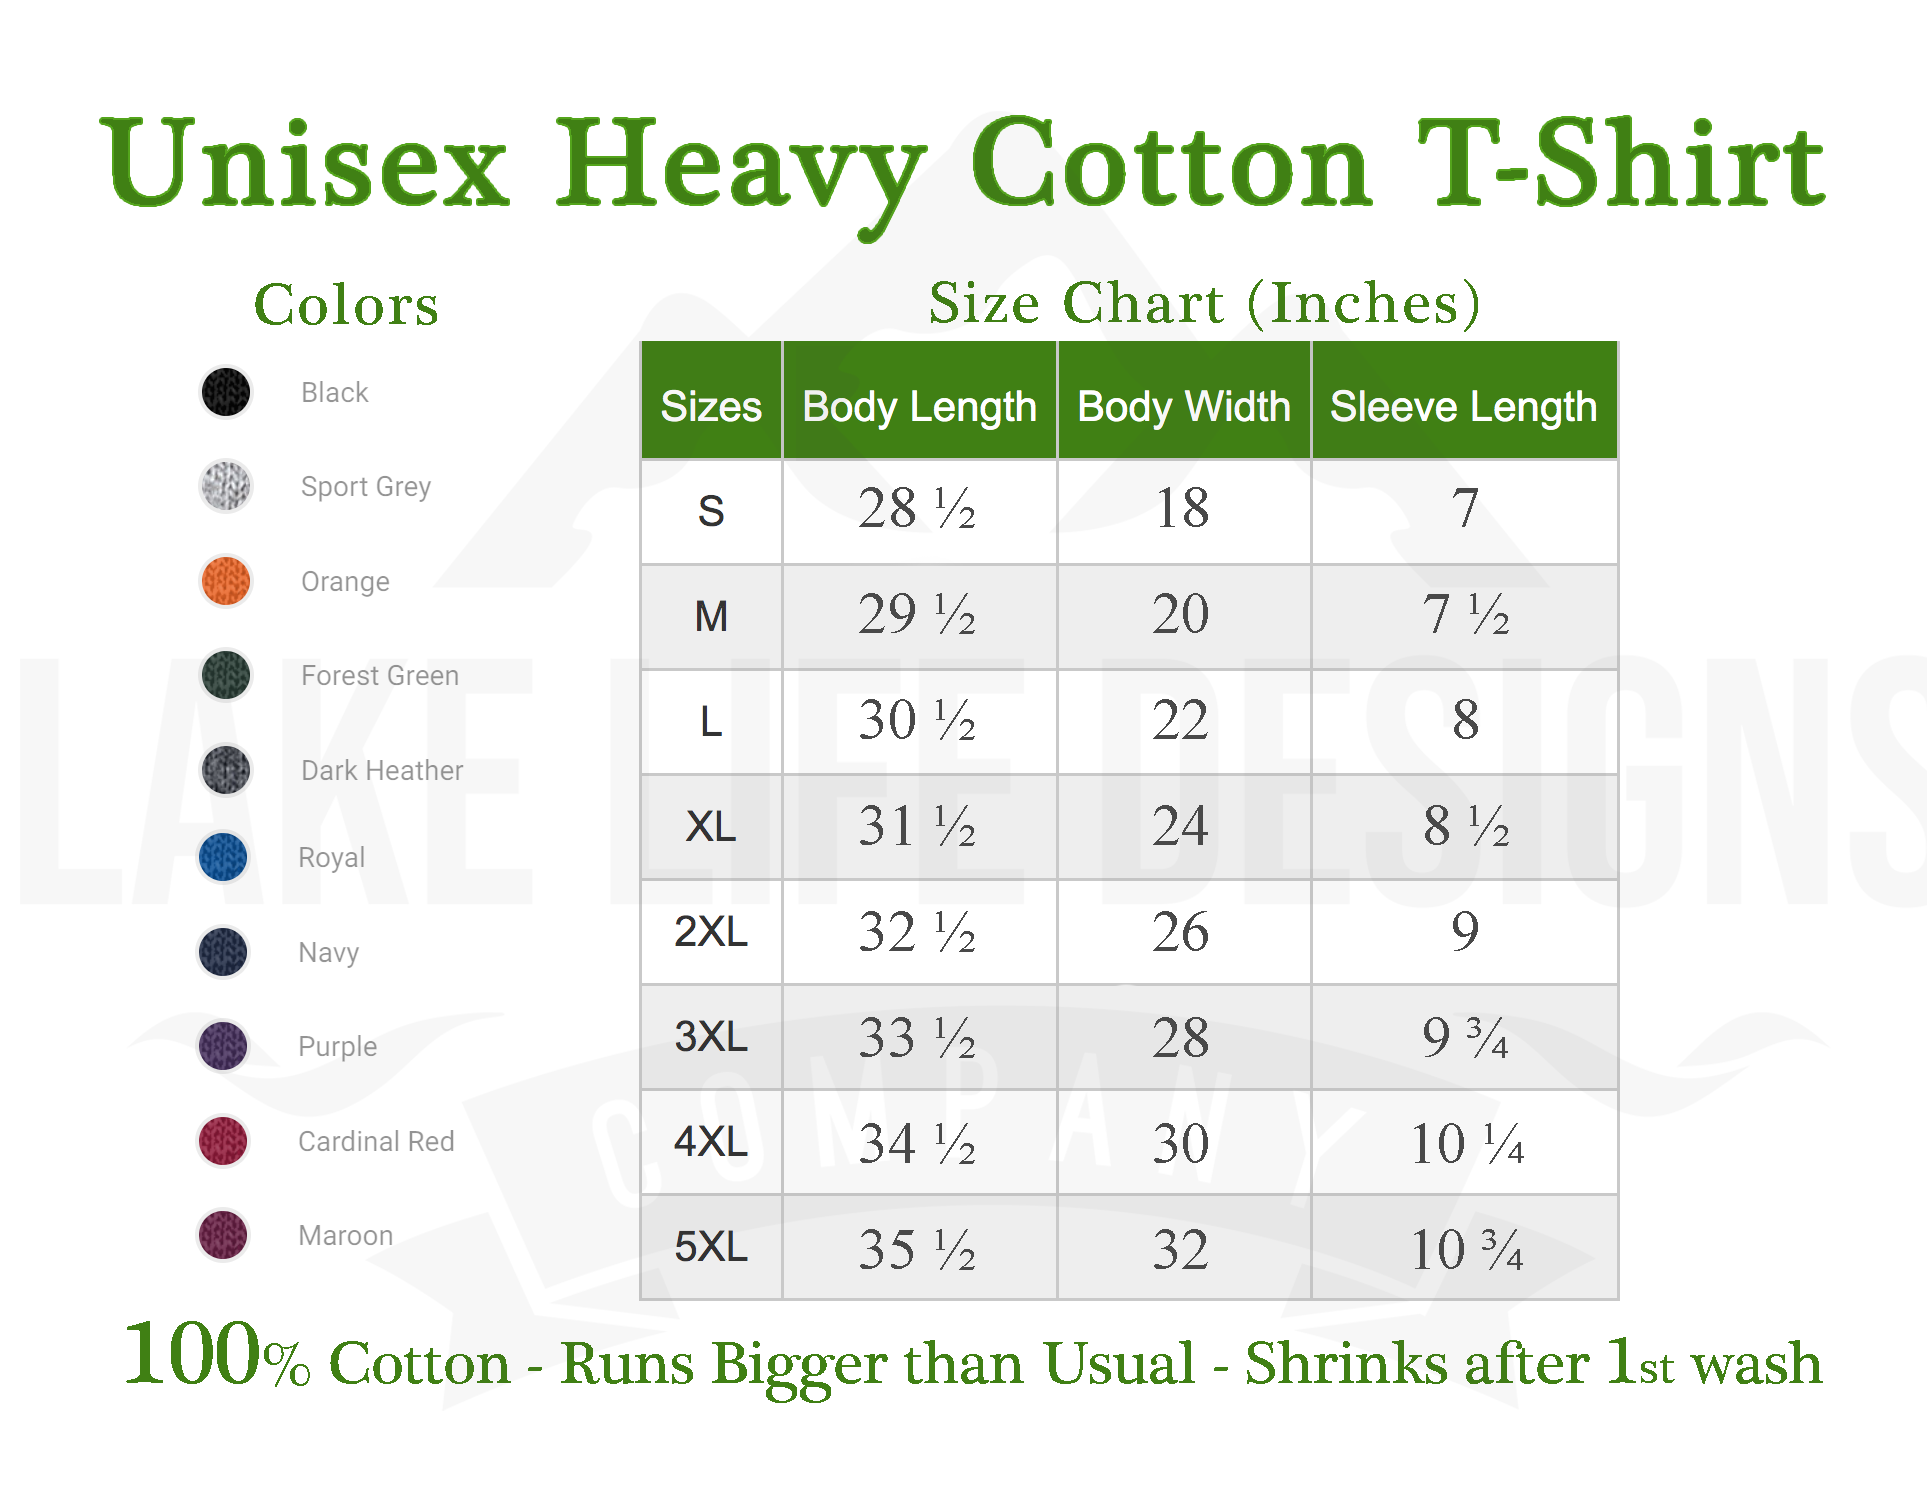 Texoma Lake Life - Cotton Short Sleeved - FRONT & BACK PRINTED - Short Sleeved Cotton Tee - Texas Lake